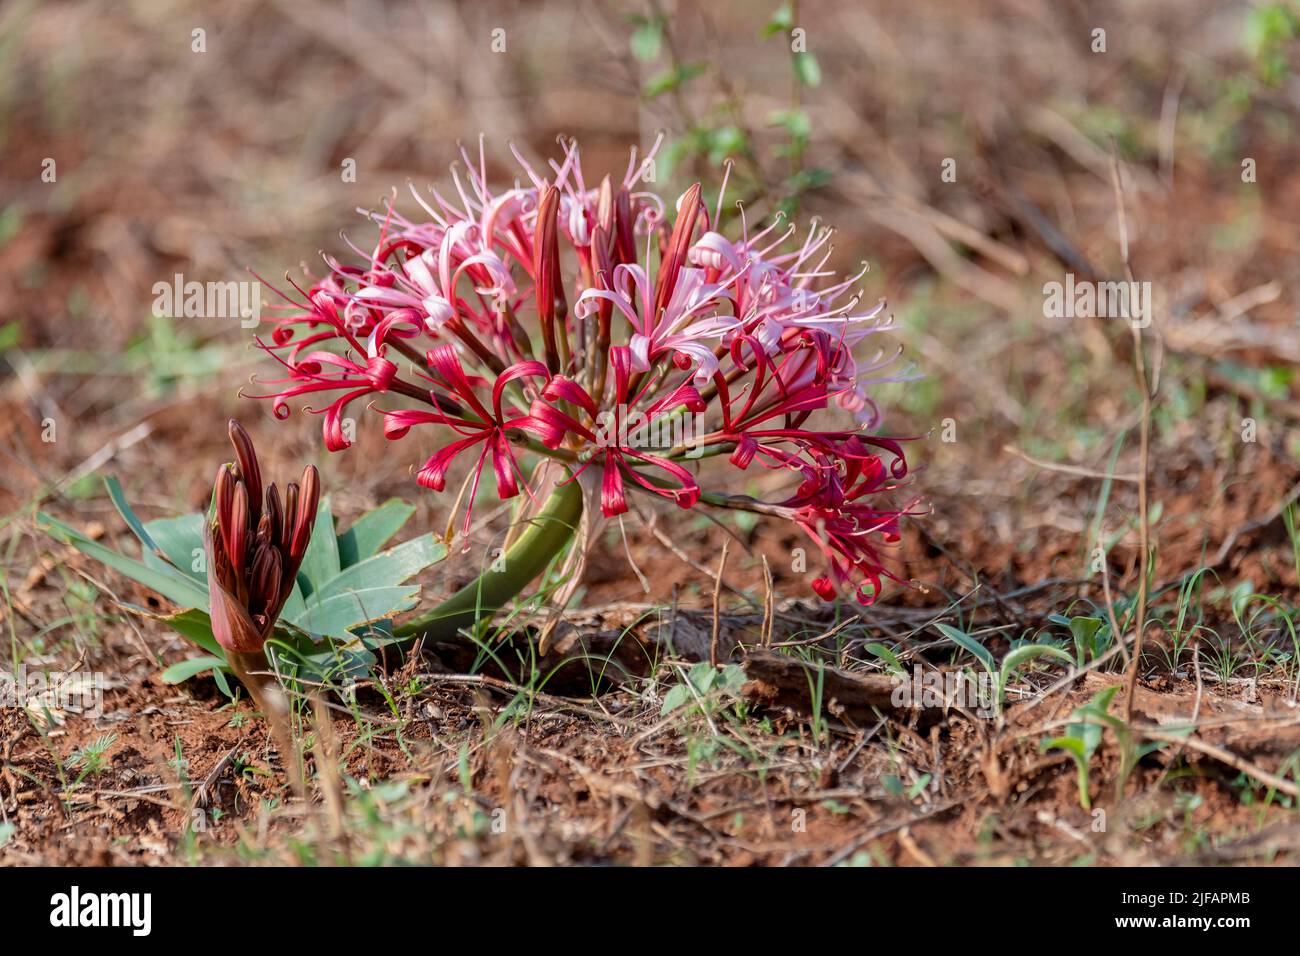 Sore eye flower (Ammocharis coranica) from Zimanga, South Africa. Stock Photo